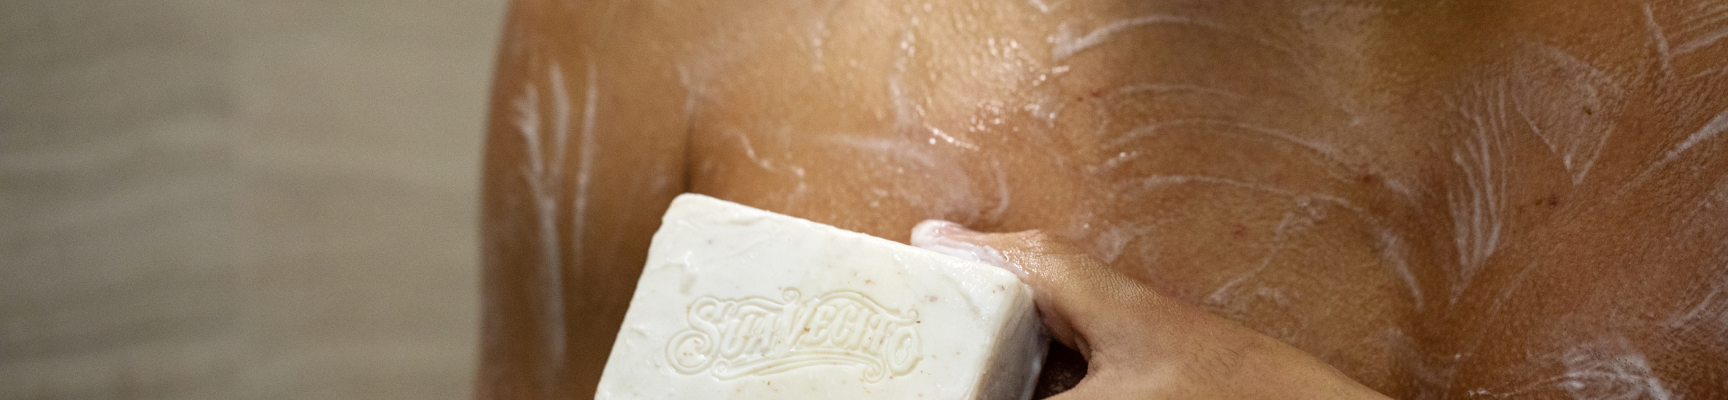 man lathering suavecito body soap on chest